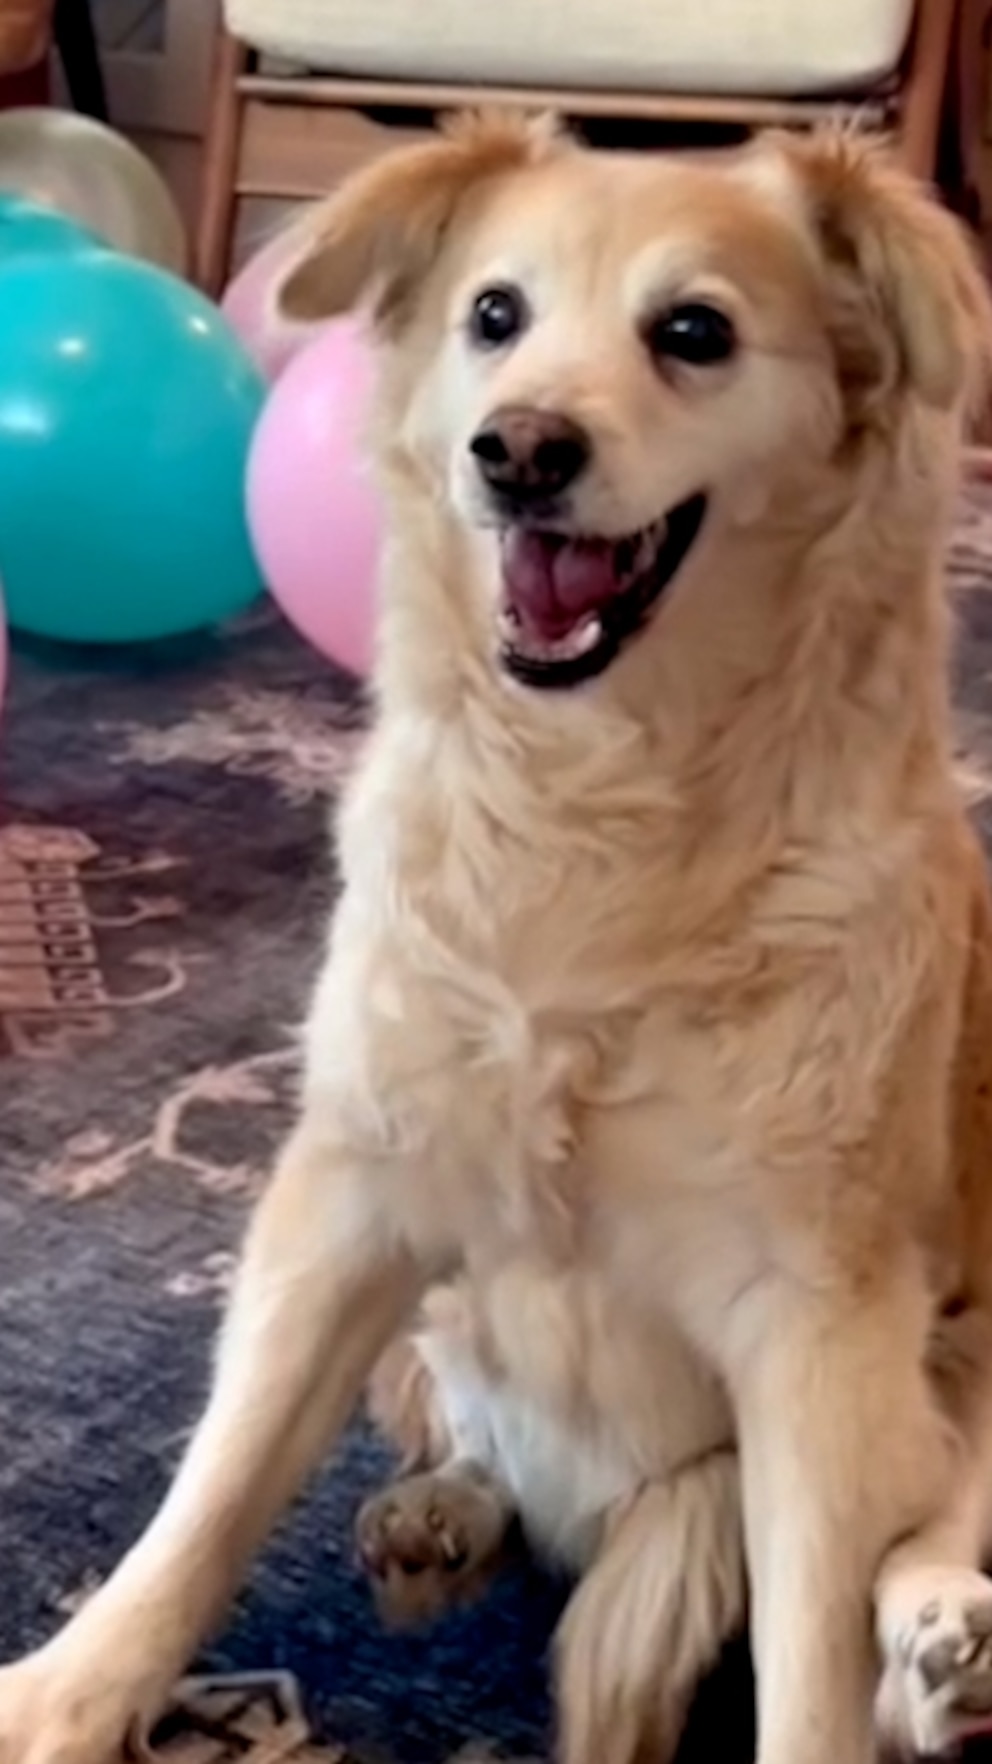 WATCH: Partially paralyzed dog celebrates 13th birthday in style